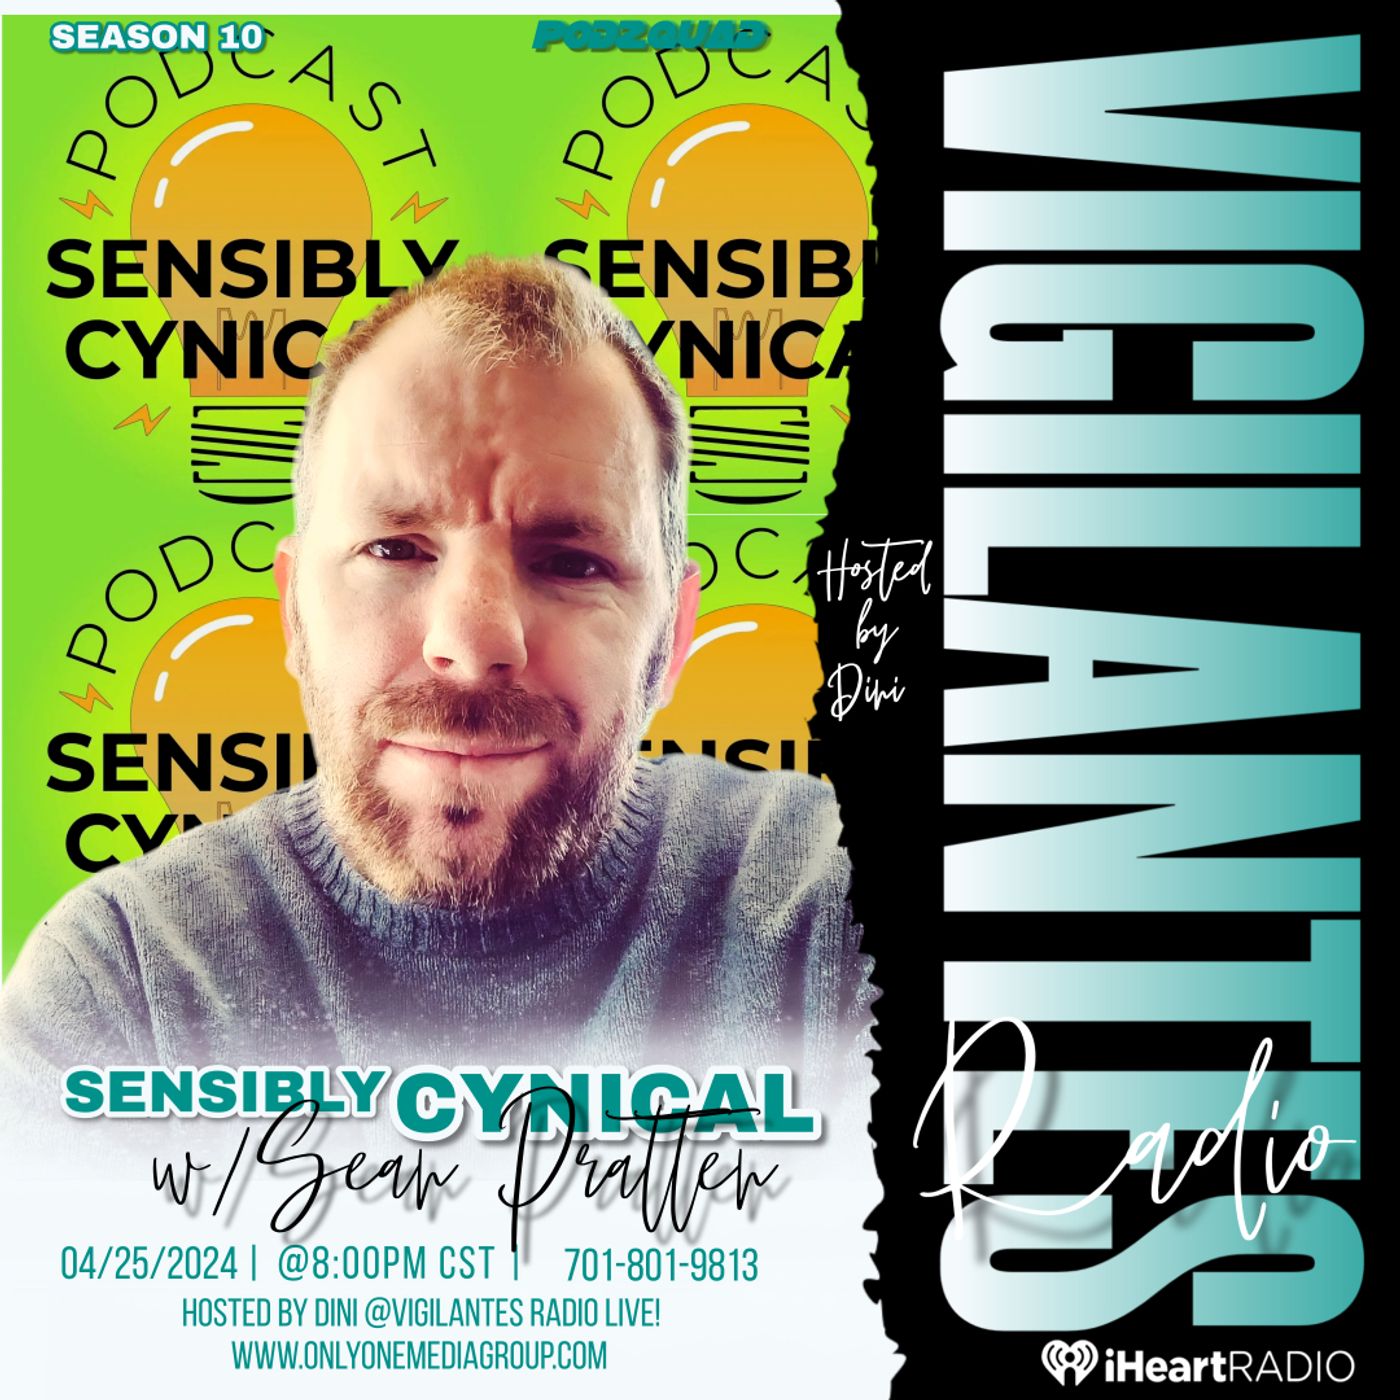 The Sensibly Cynical Podcast w/ Sean Pratten.